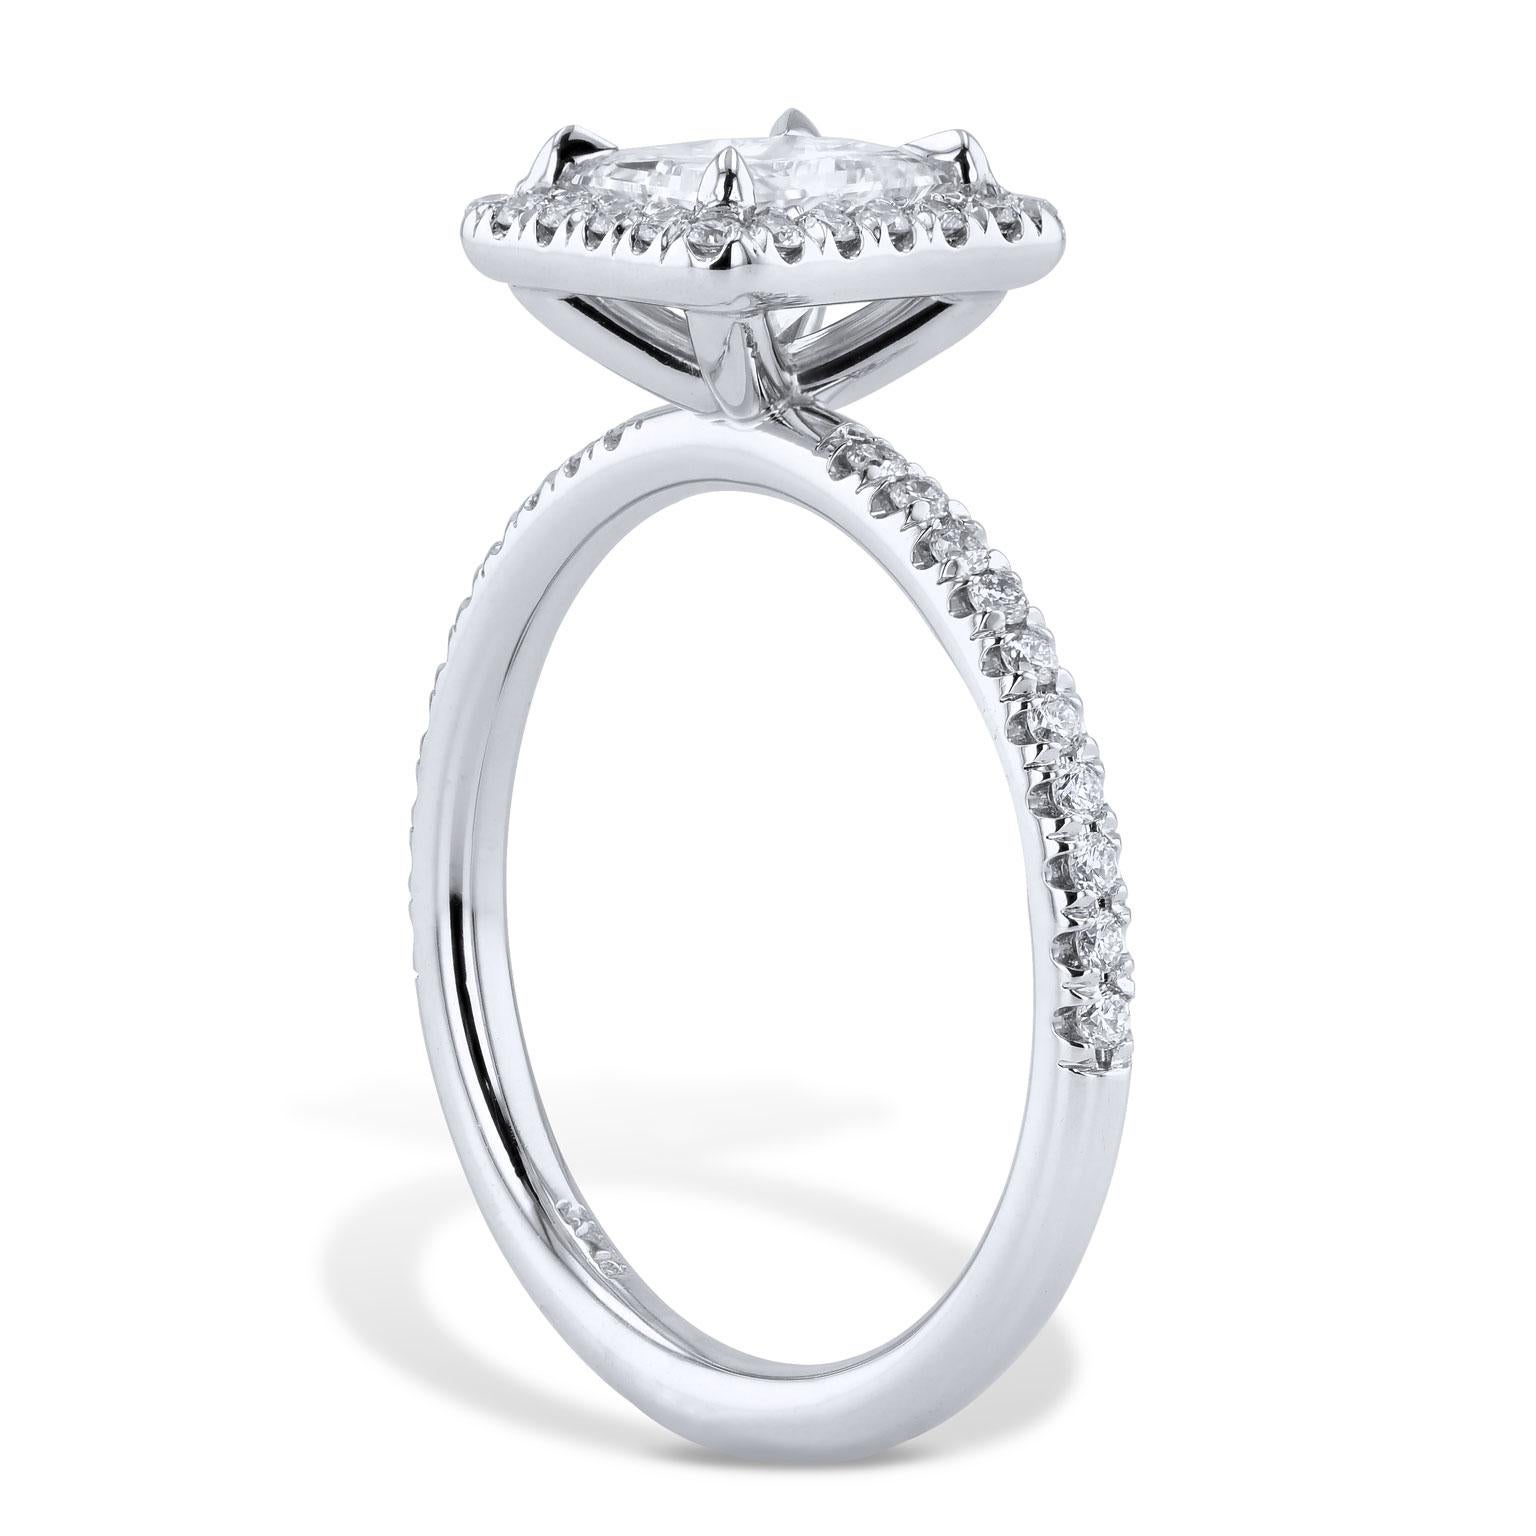 0.92 carat diamond ring